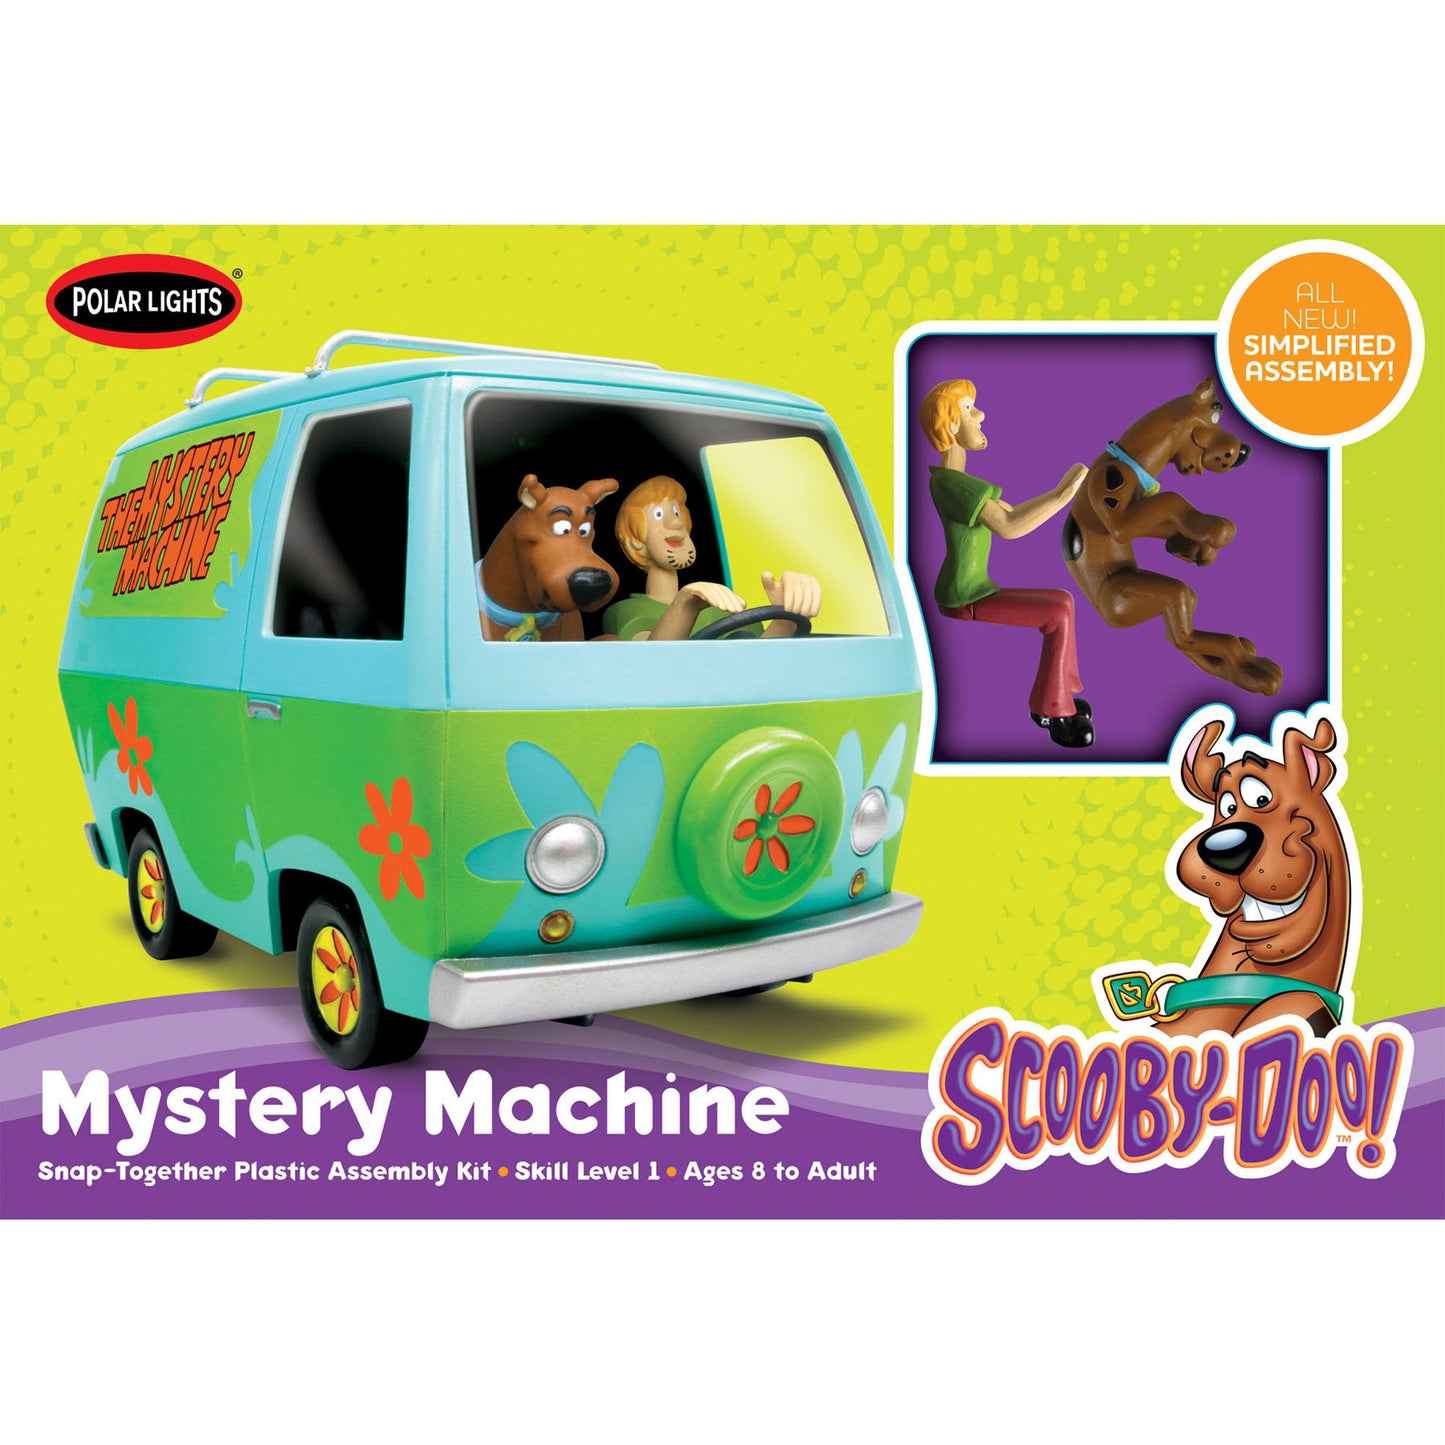 1/25 Scooby-Doo Mystery Machine, Snap Kit